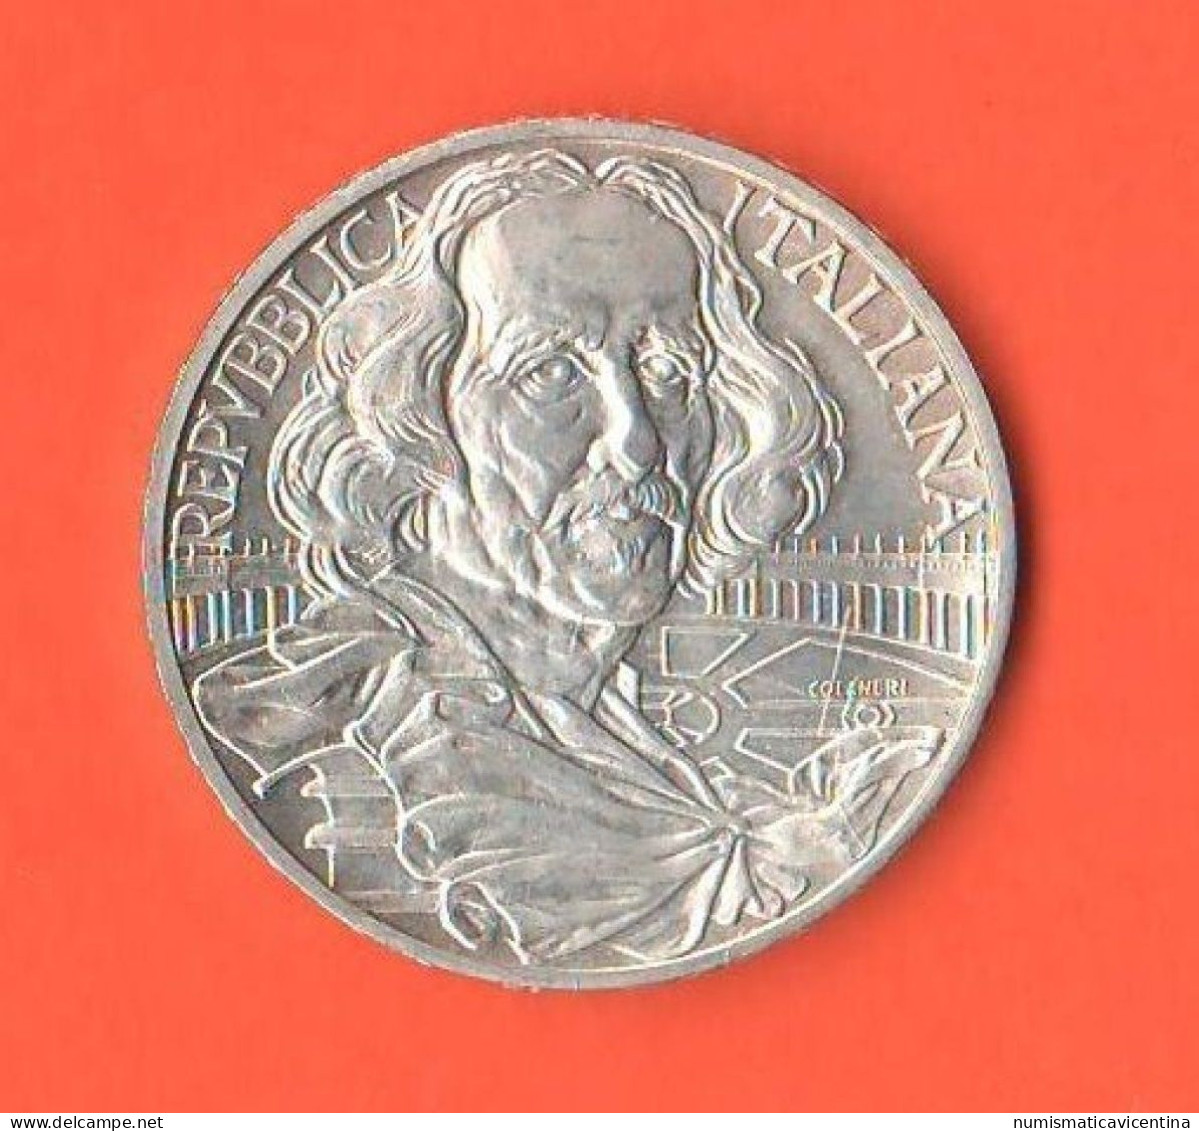 Italia 1000 Lire 1998 Bernini Italy Italie Silver Commemorative Coin - Gedenkmünzen